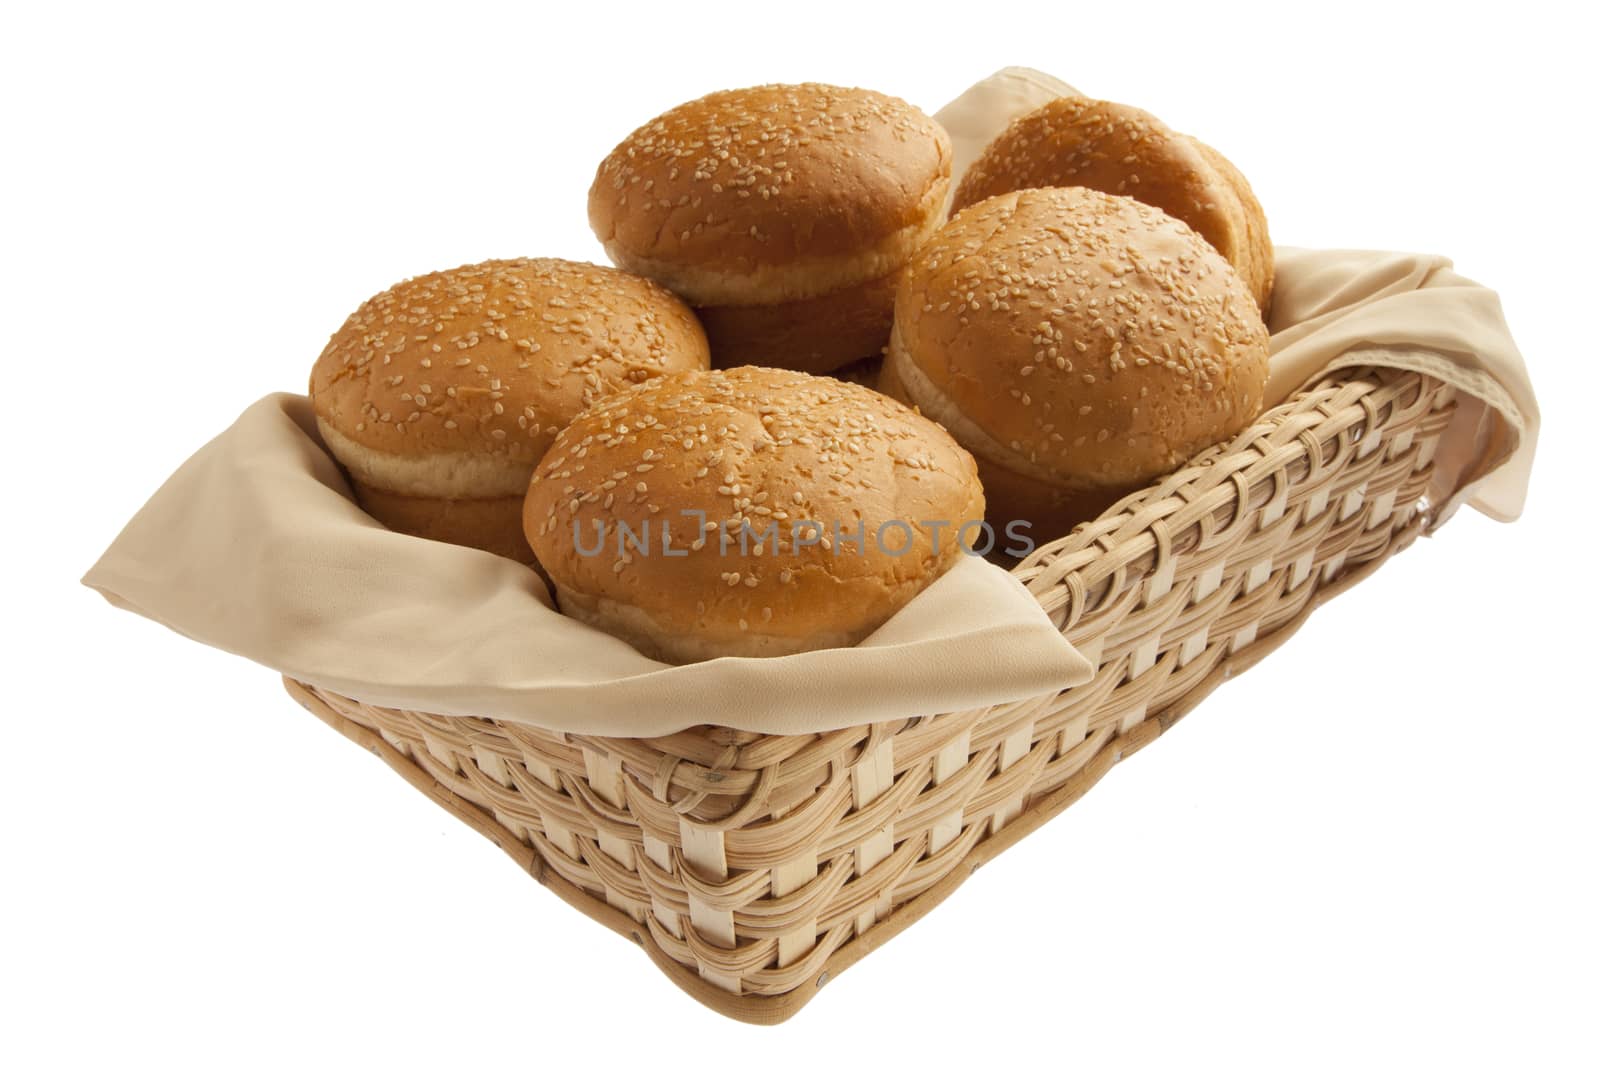 Scrumptious baked buns in basket  by haiderazim